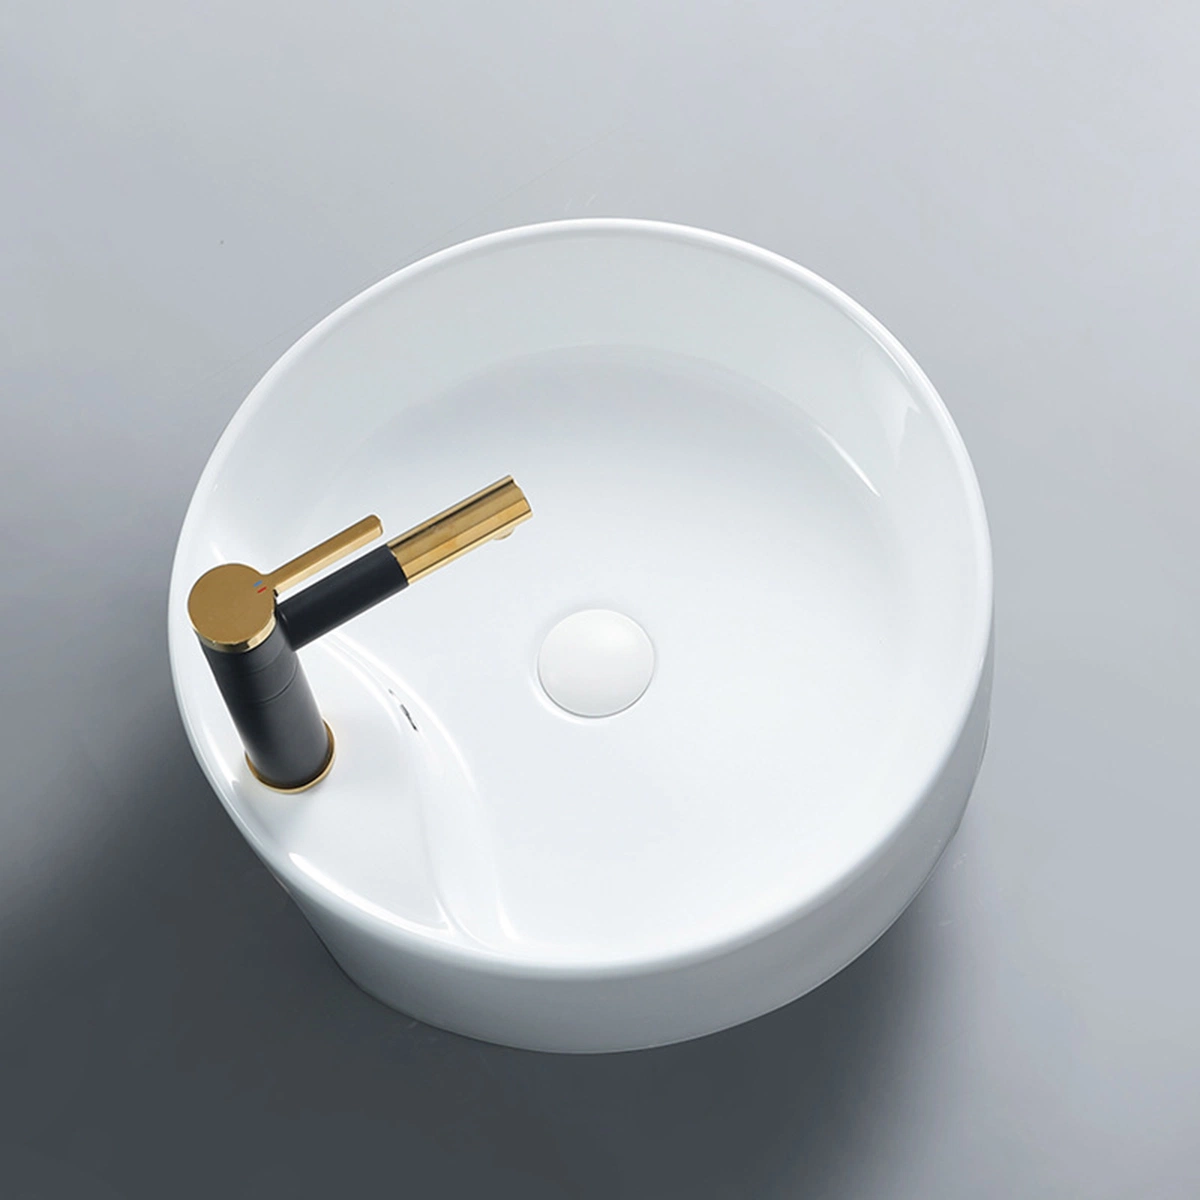 Customizable Ceramic Sanitary Ware Bathroom Small Wash Basin Bowl Round Vessel Sink